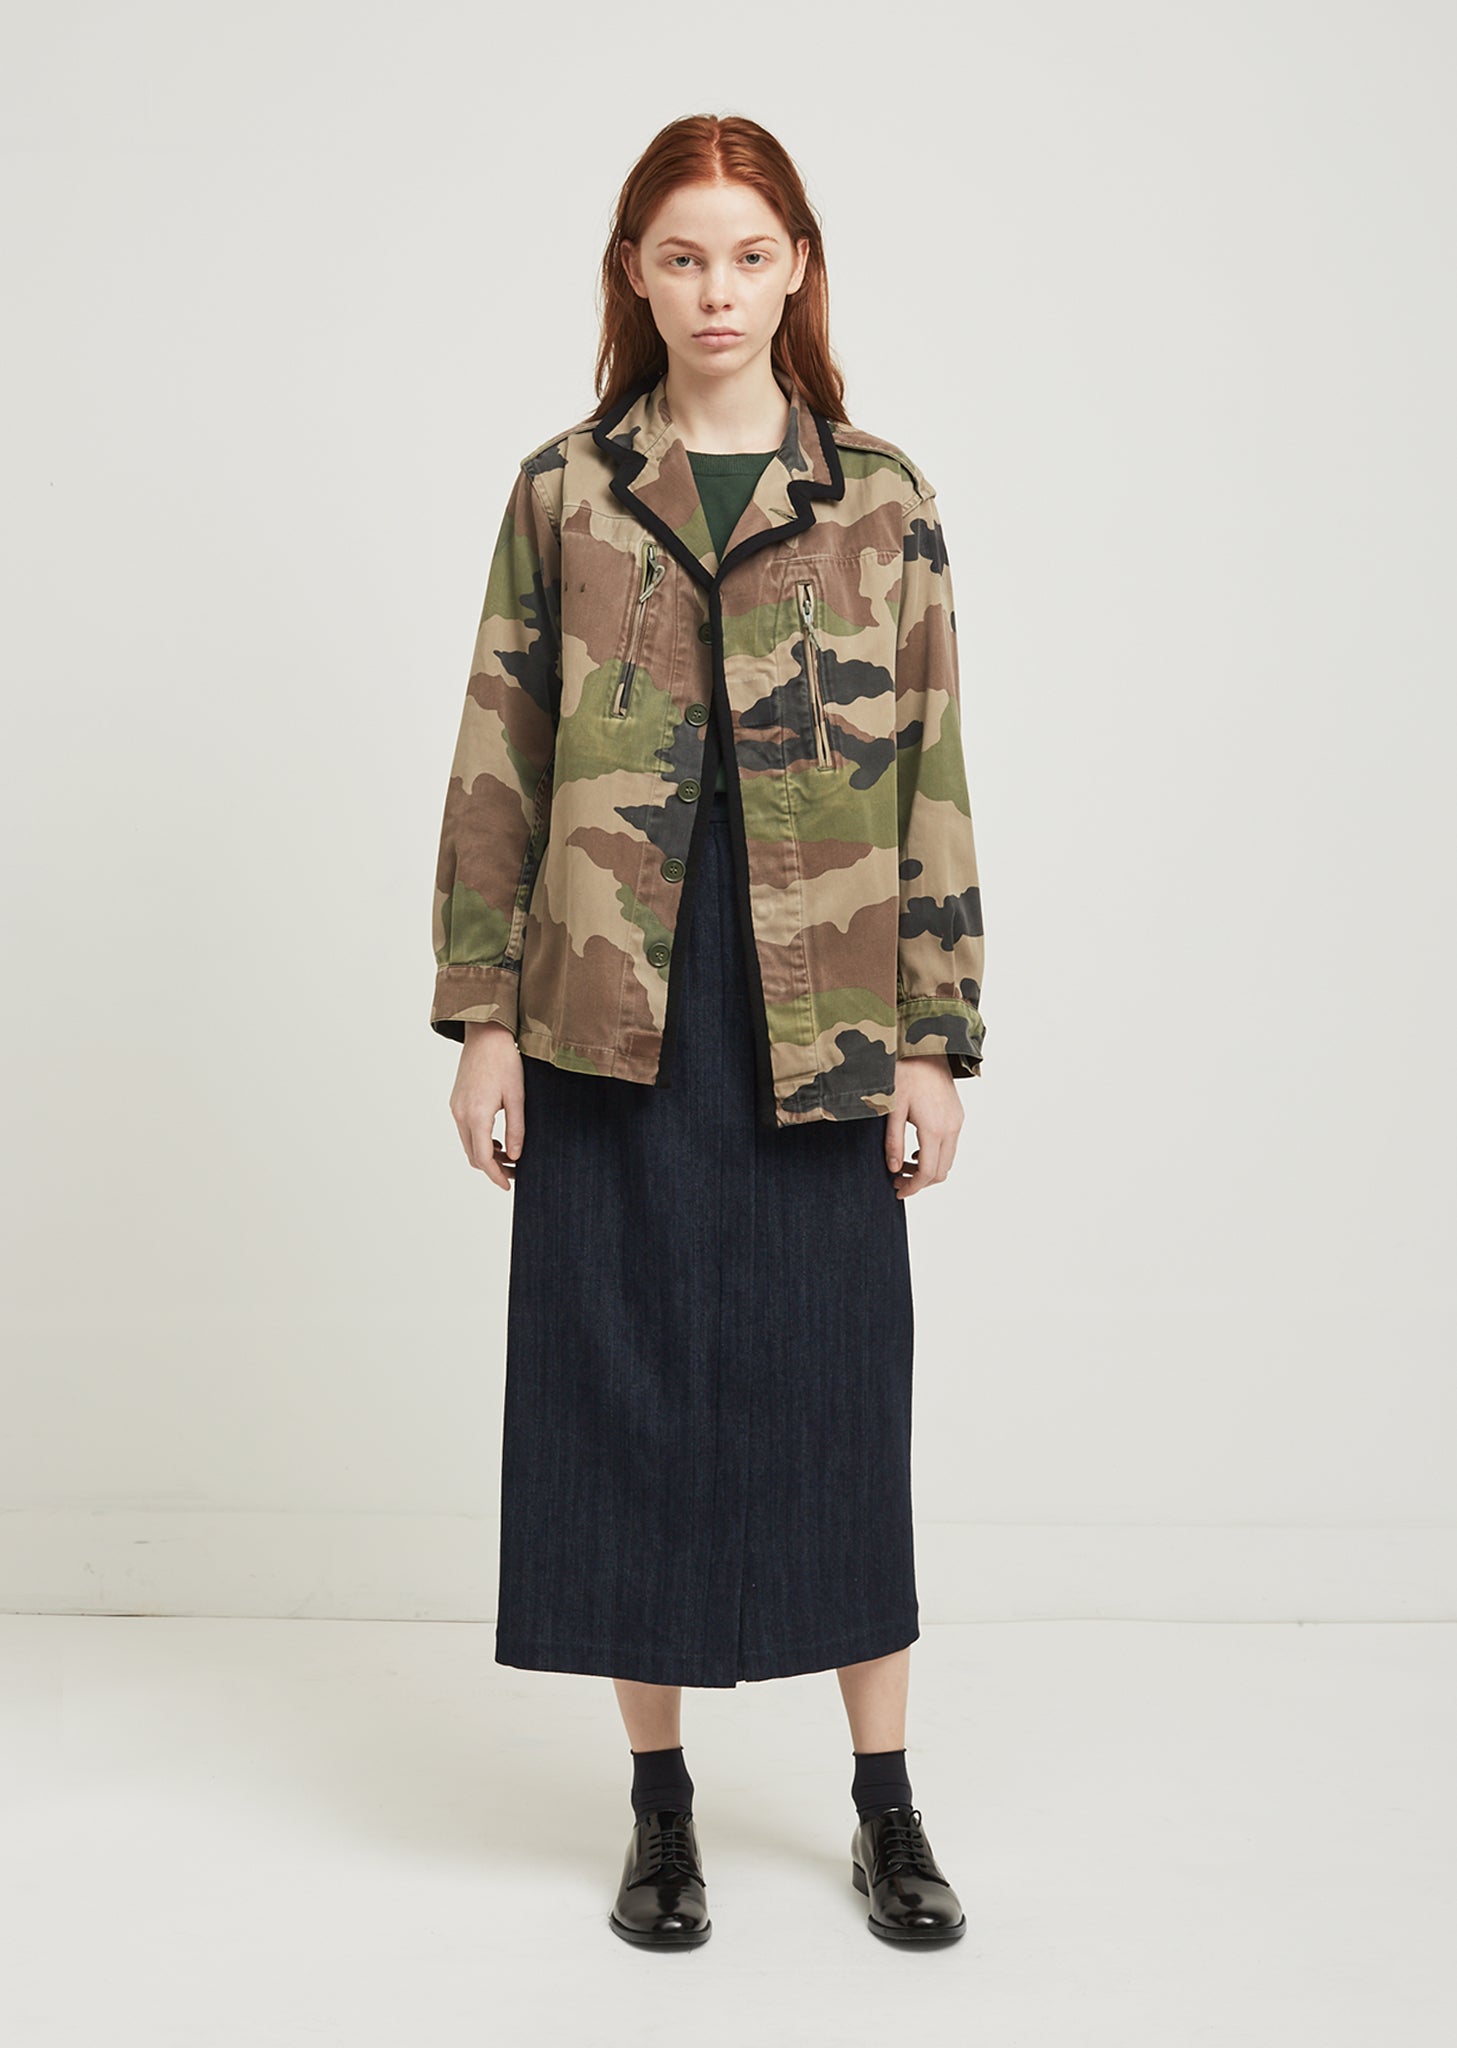 Vroom Camouflage Cotton Blend Military Jacket by Lutz Huelle- La Garçonne